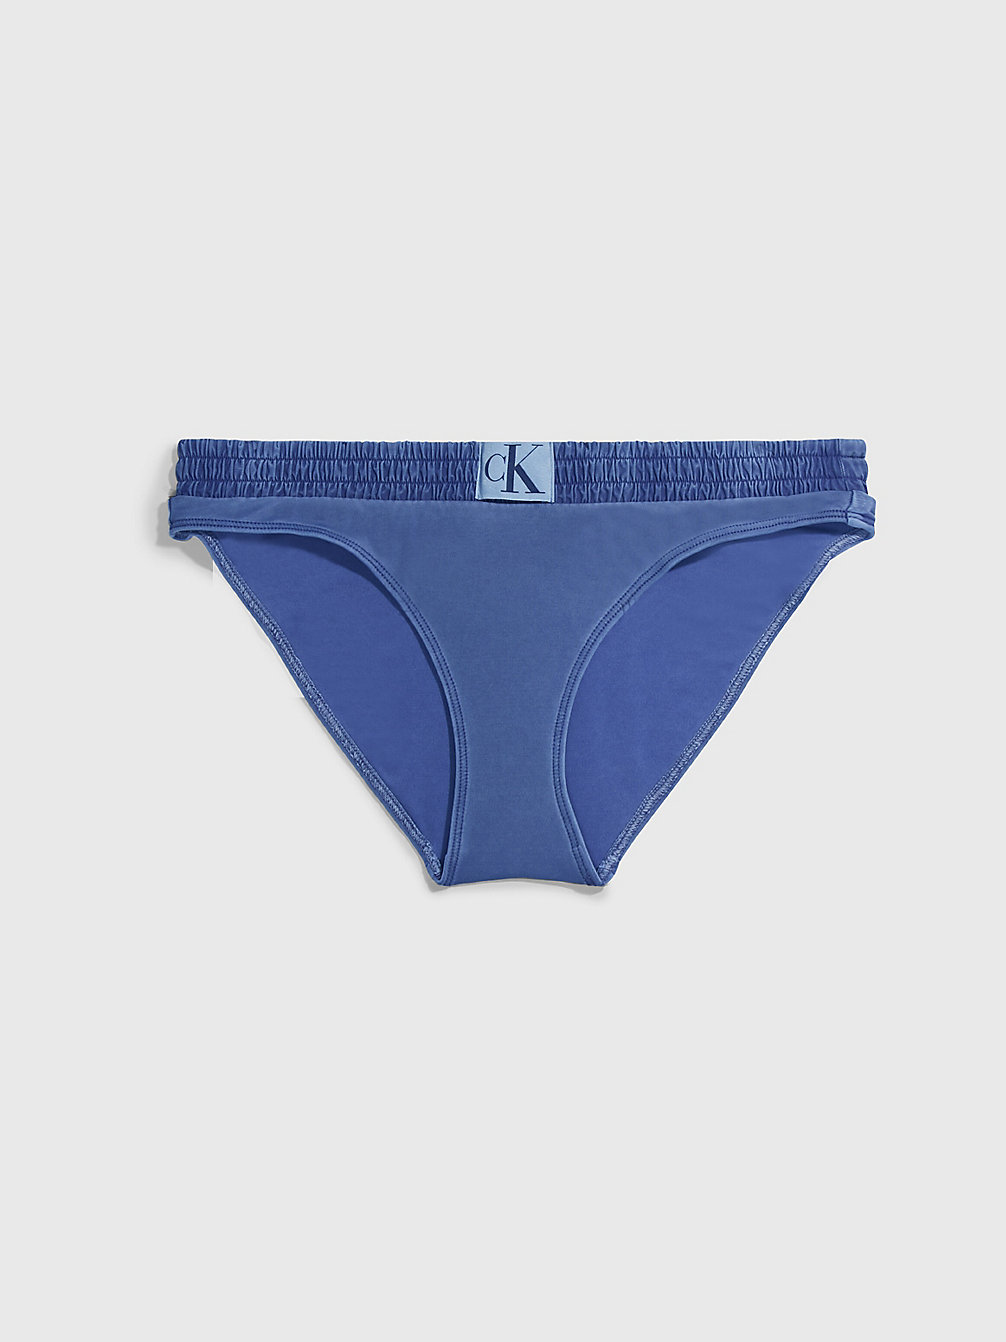 NAVY IRIS Bikini Bottoms - CK Authentic undefined women Calvin Klein